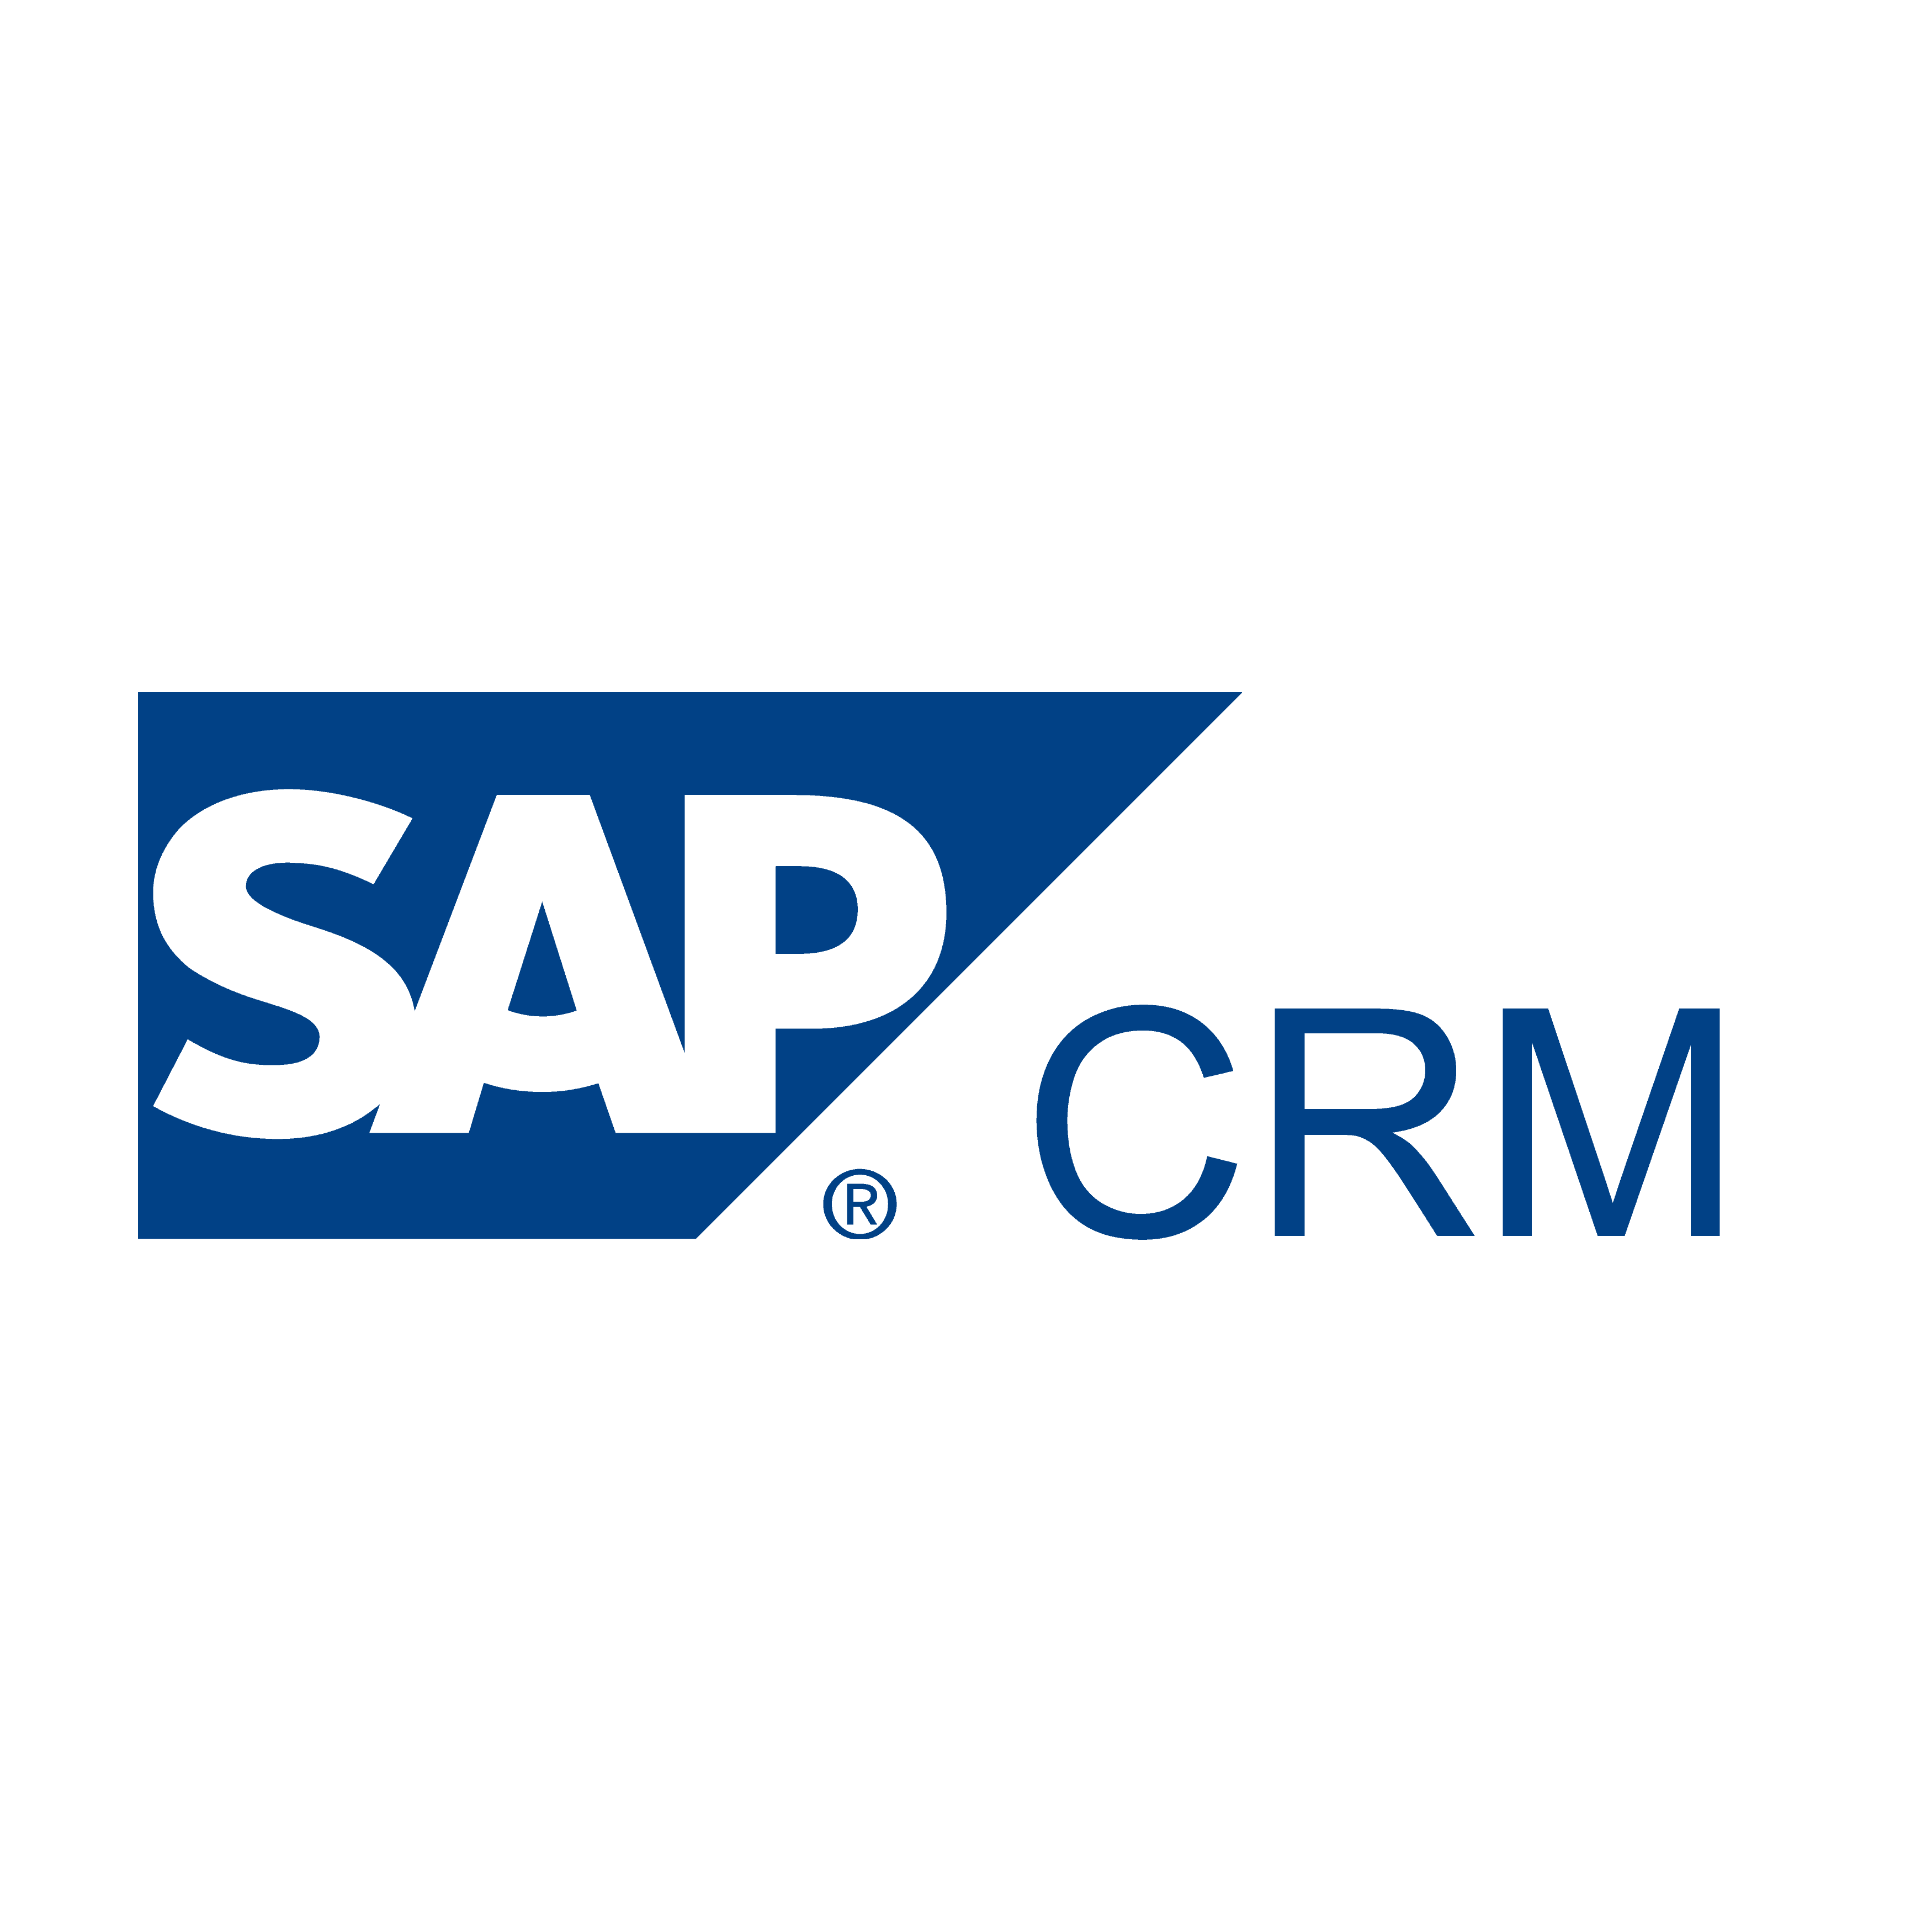 SAP CRM Software Reviews, Features & Pricing SoftwareMeets